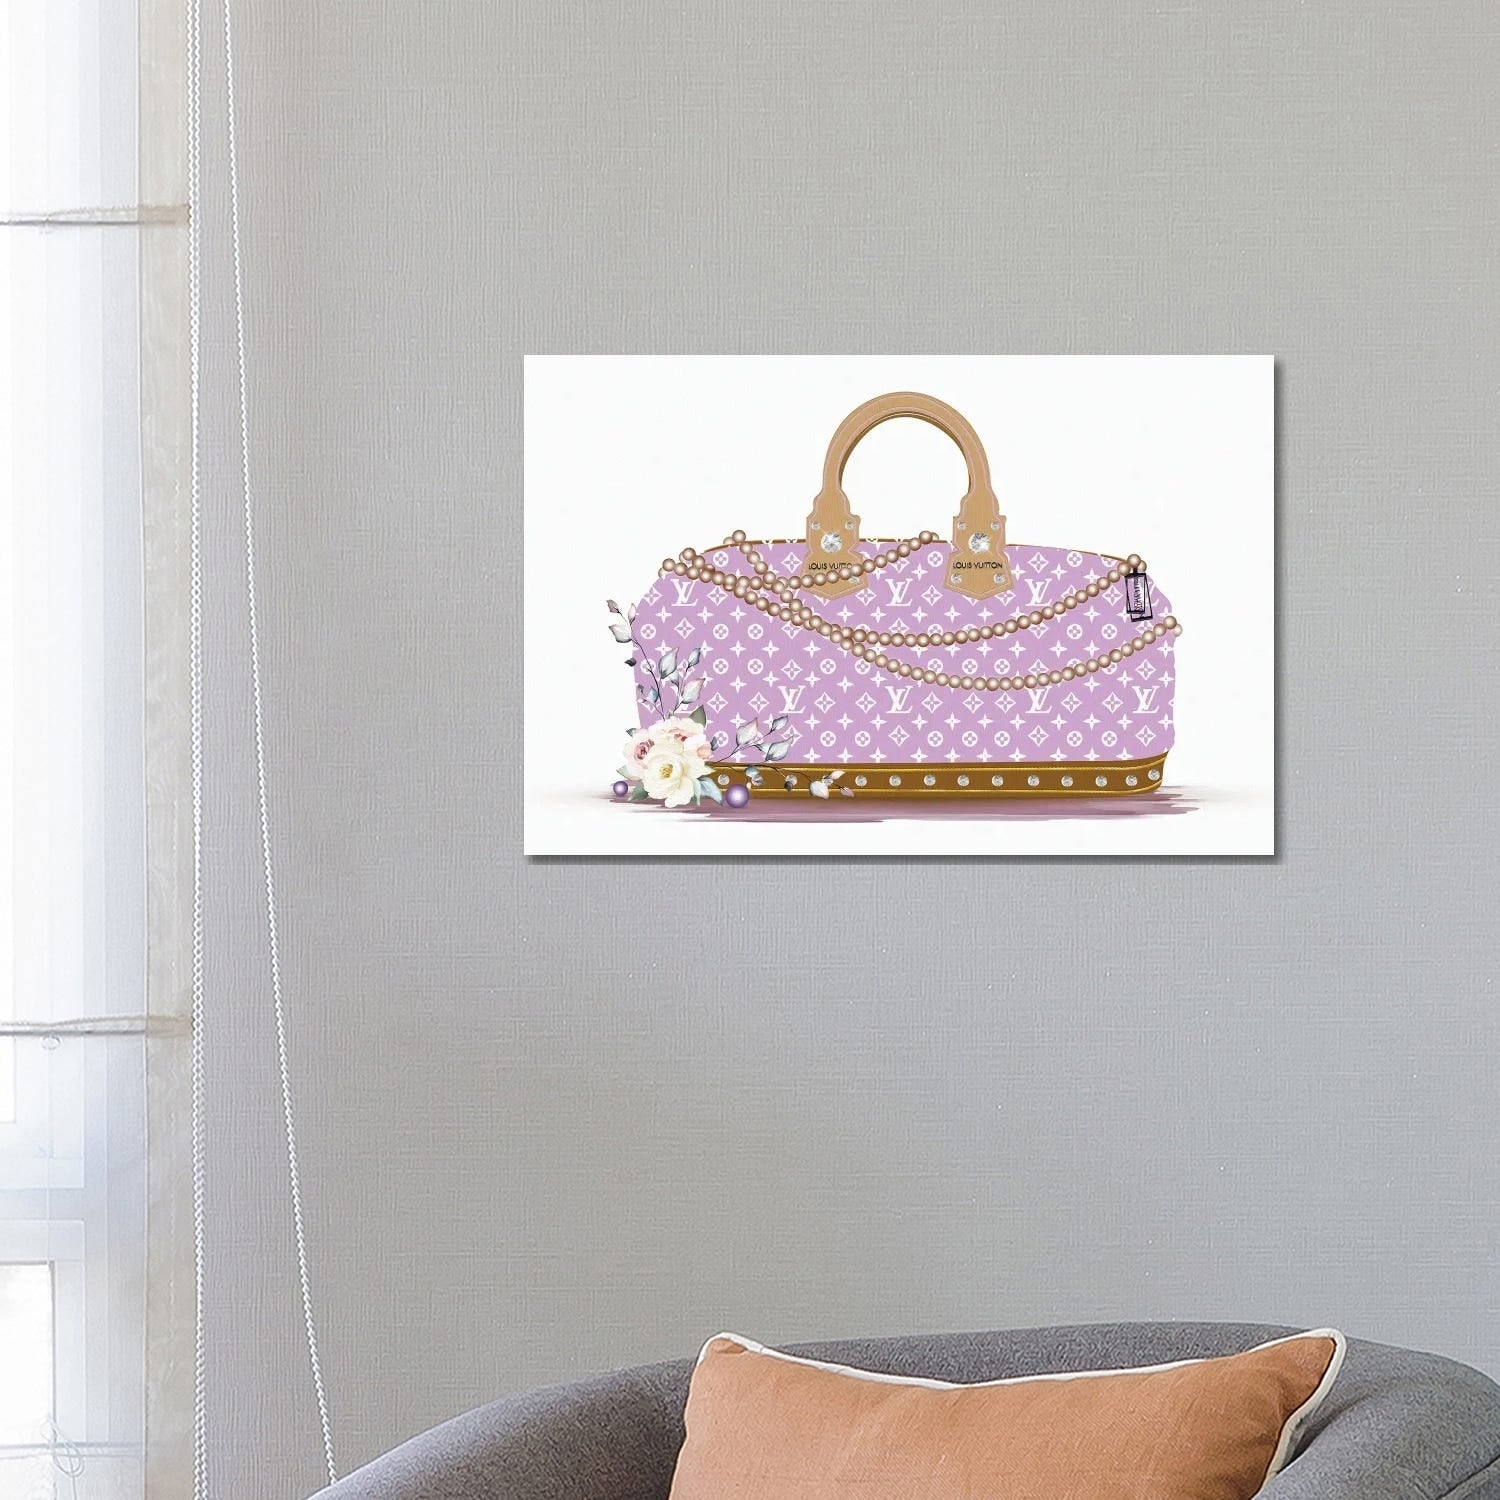 Pomaikai Barron Canvas Art Prints - Purple and White Fashion Duffle Bag with Brown Pearls & Roses ( Fashion > Fashion Brands > Louis Vuitton art) 